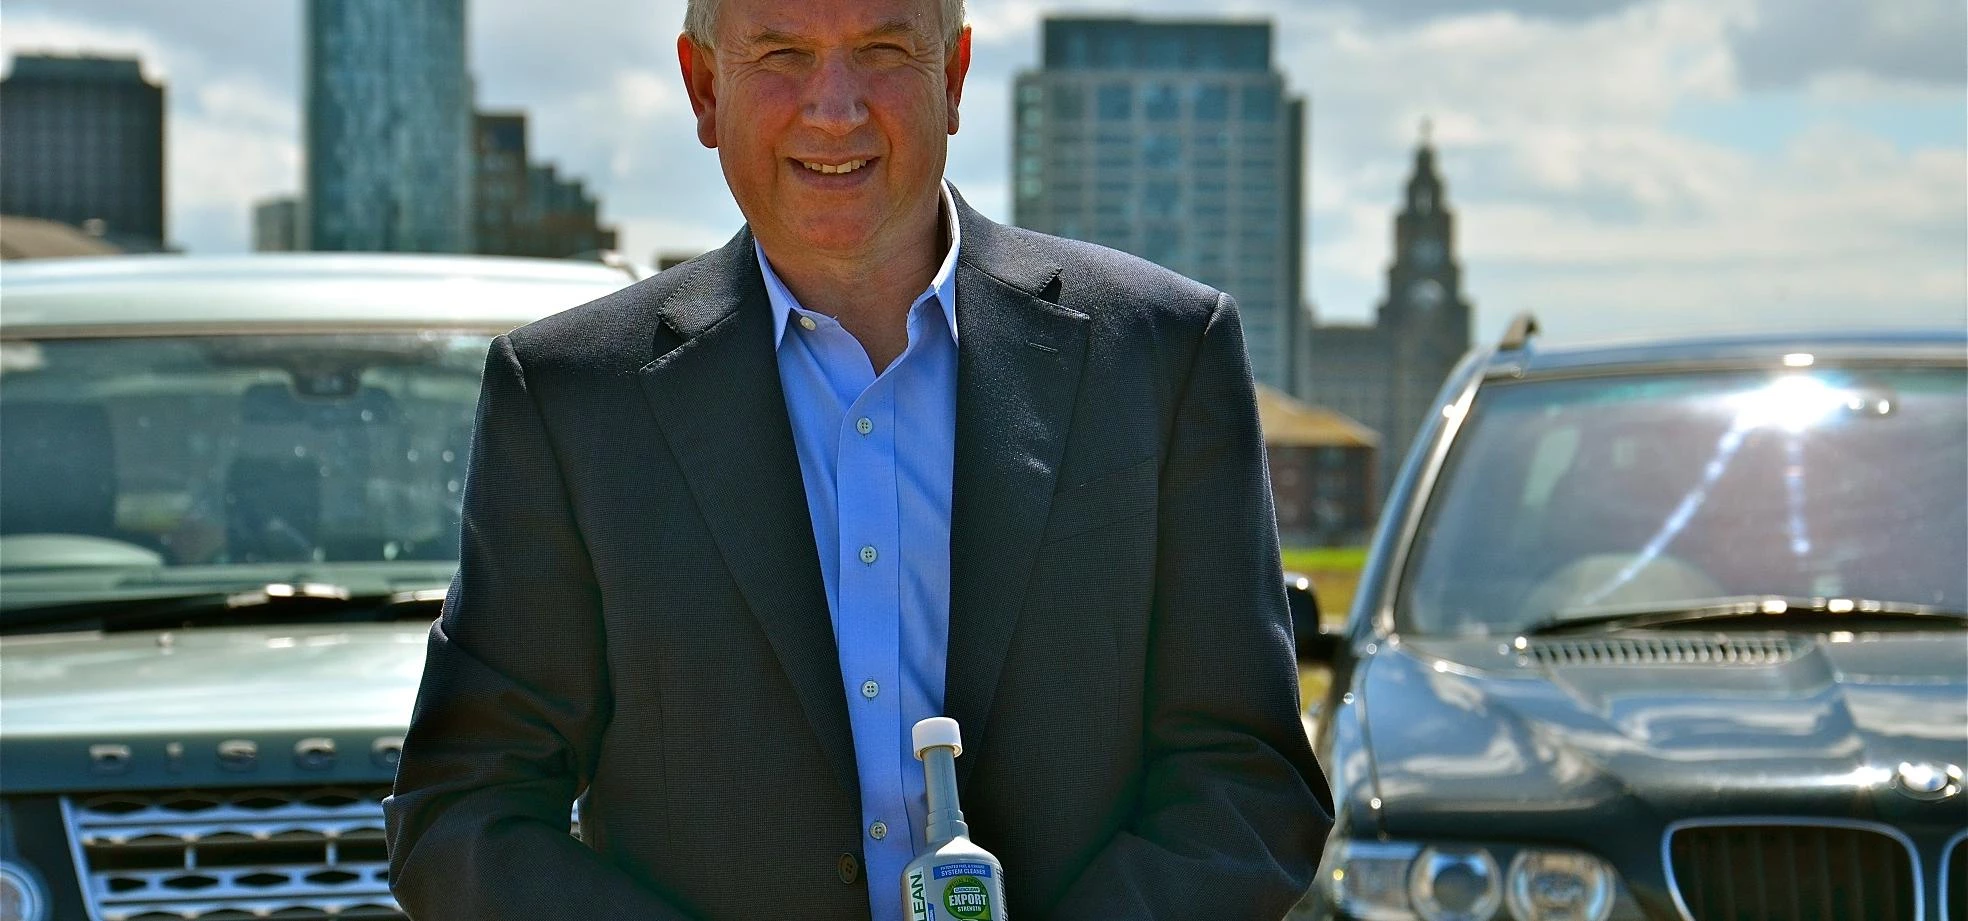 Graham Fraser, Corporate Development Director at Liverpool manufacturer Cataclean